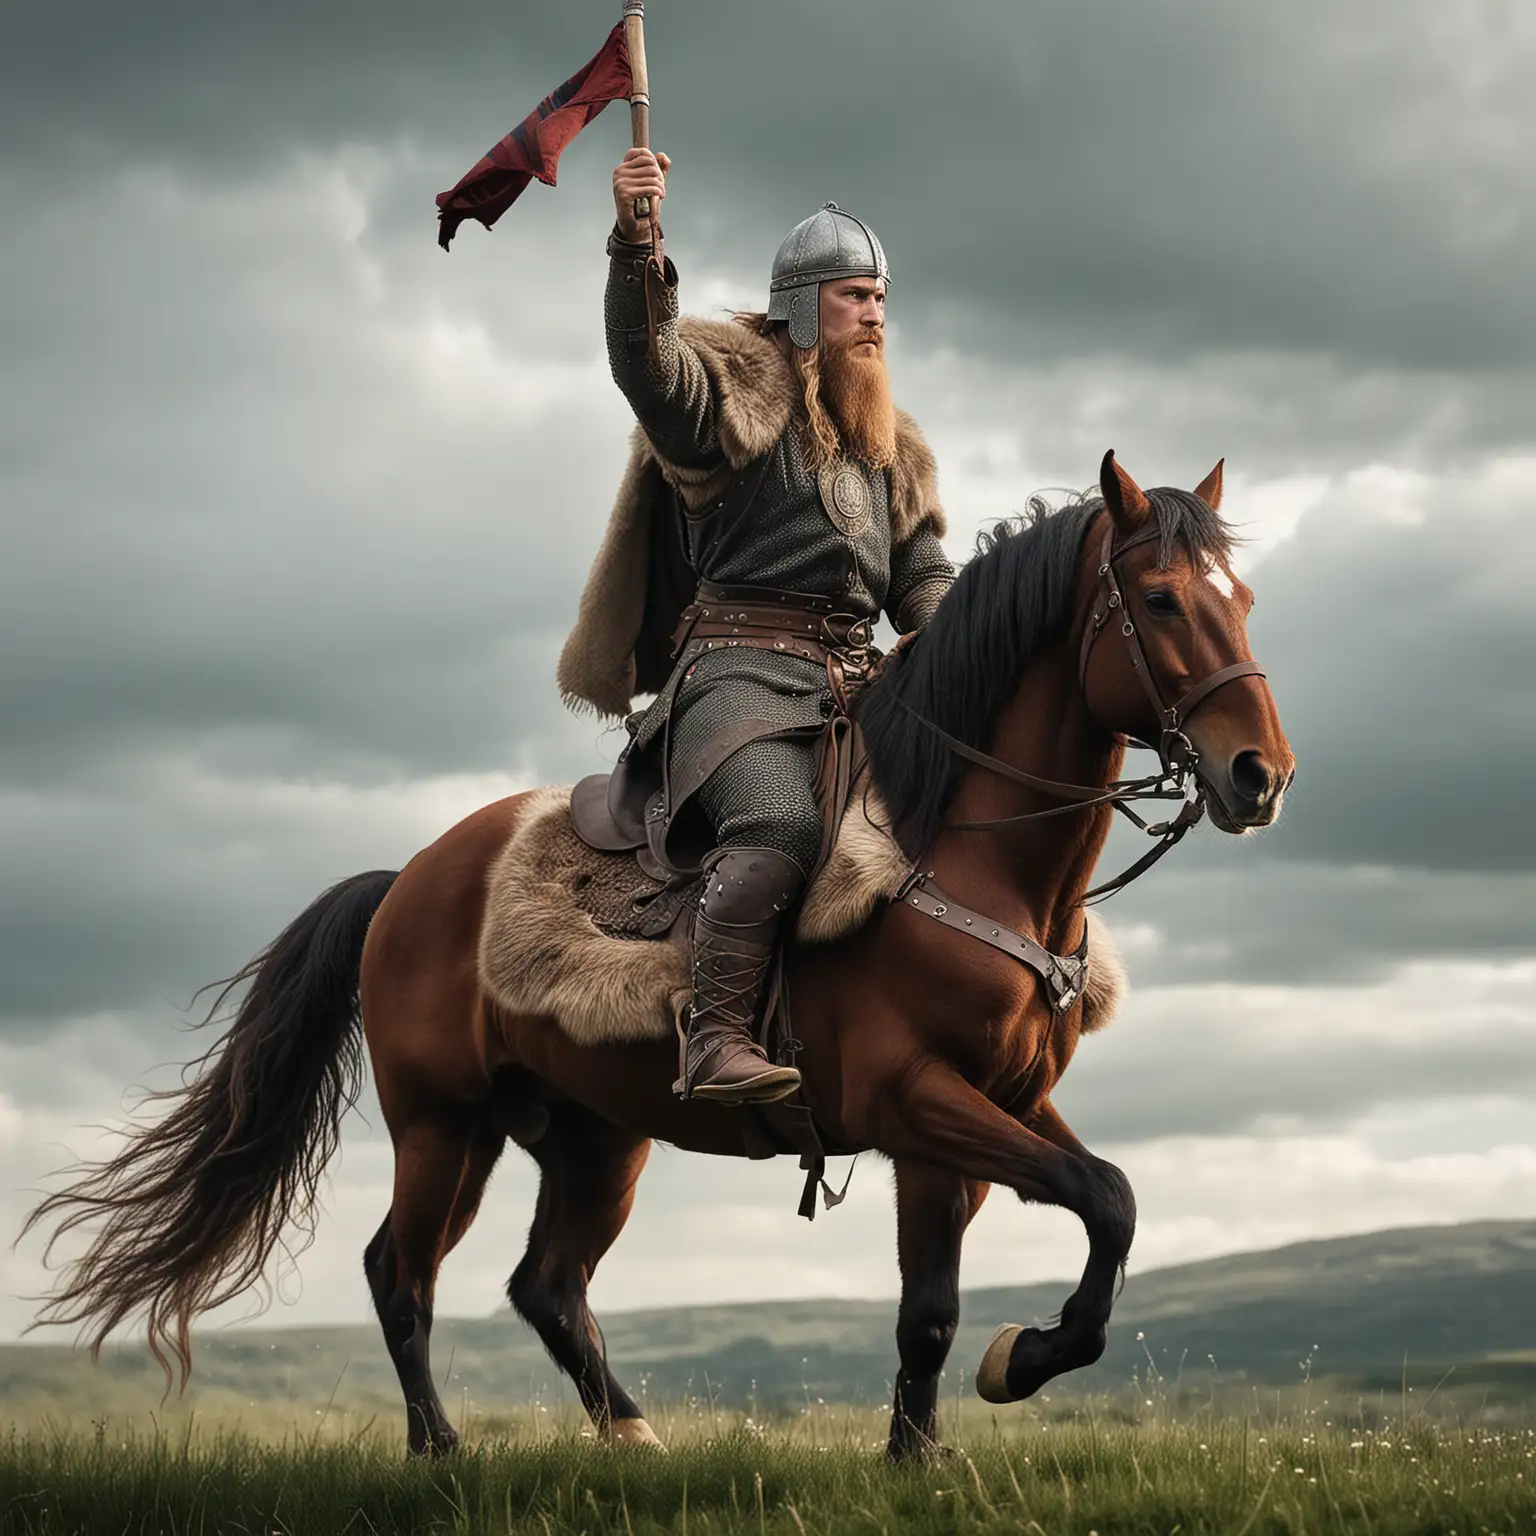 Viking Rider on Horseback in Dramatic Sunset